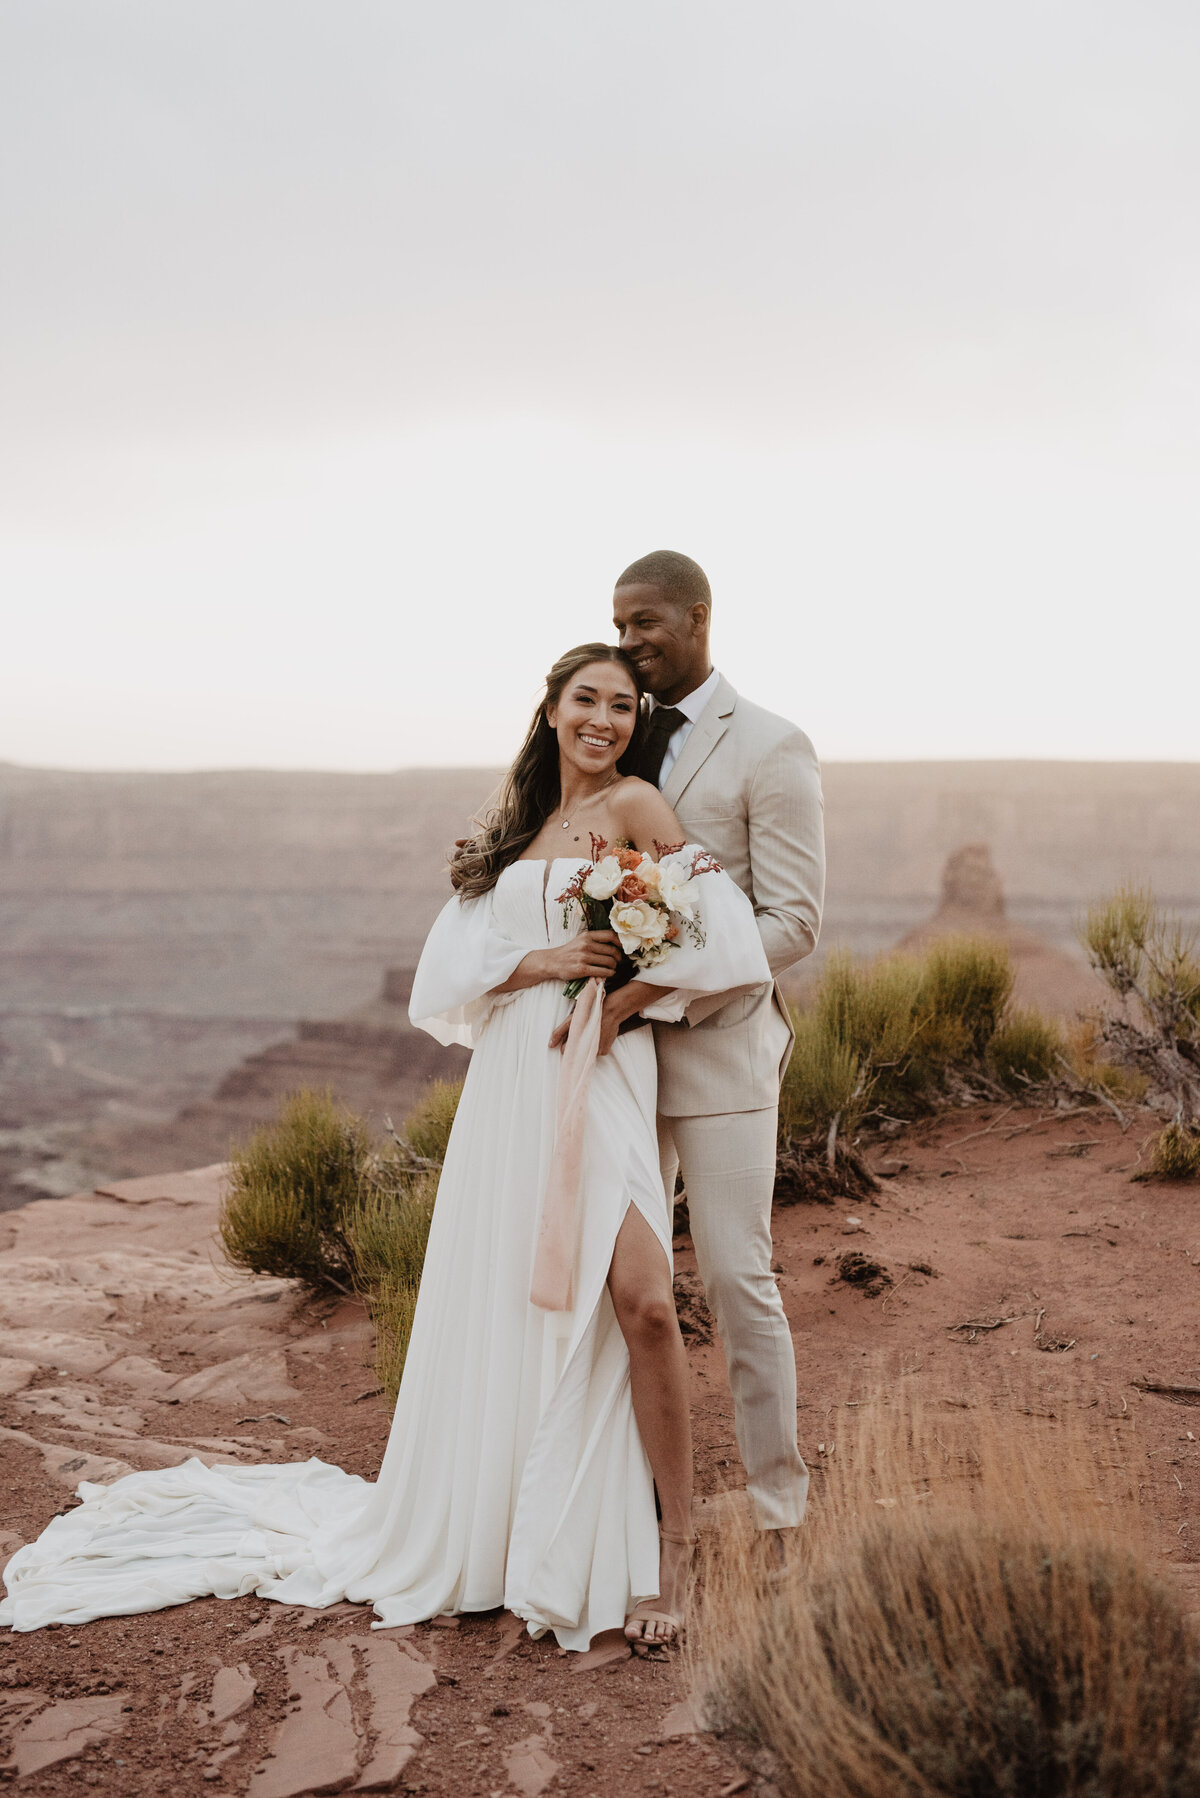 Utah Elopement Photographer captures man and woman portraits after wedding